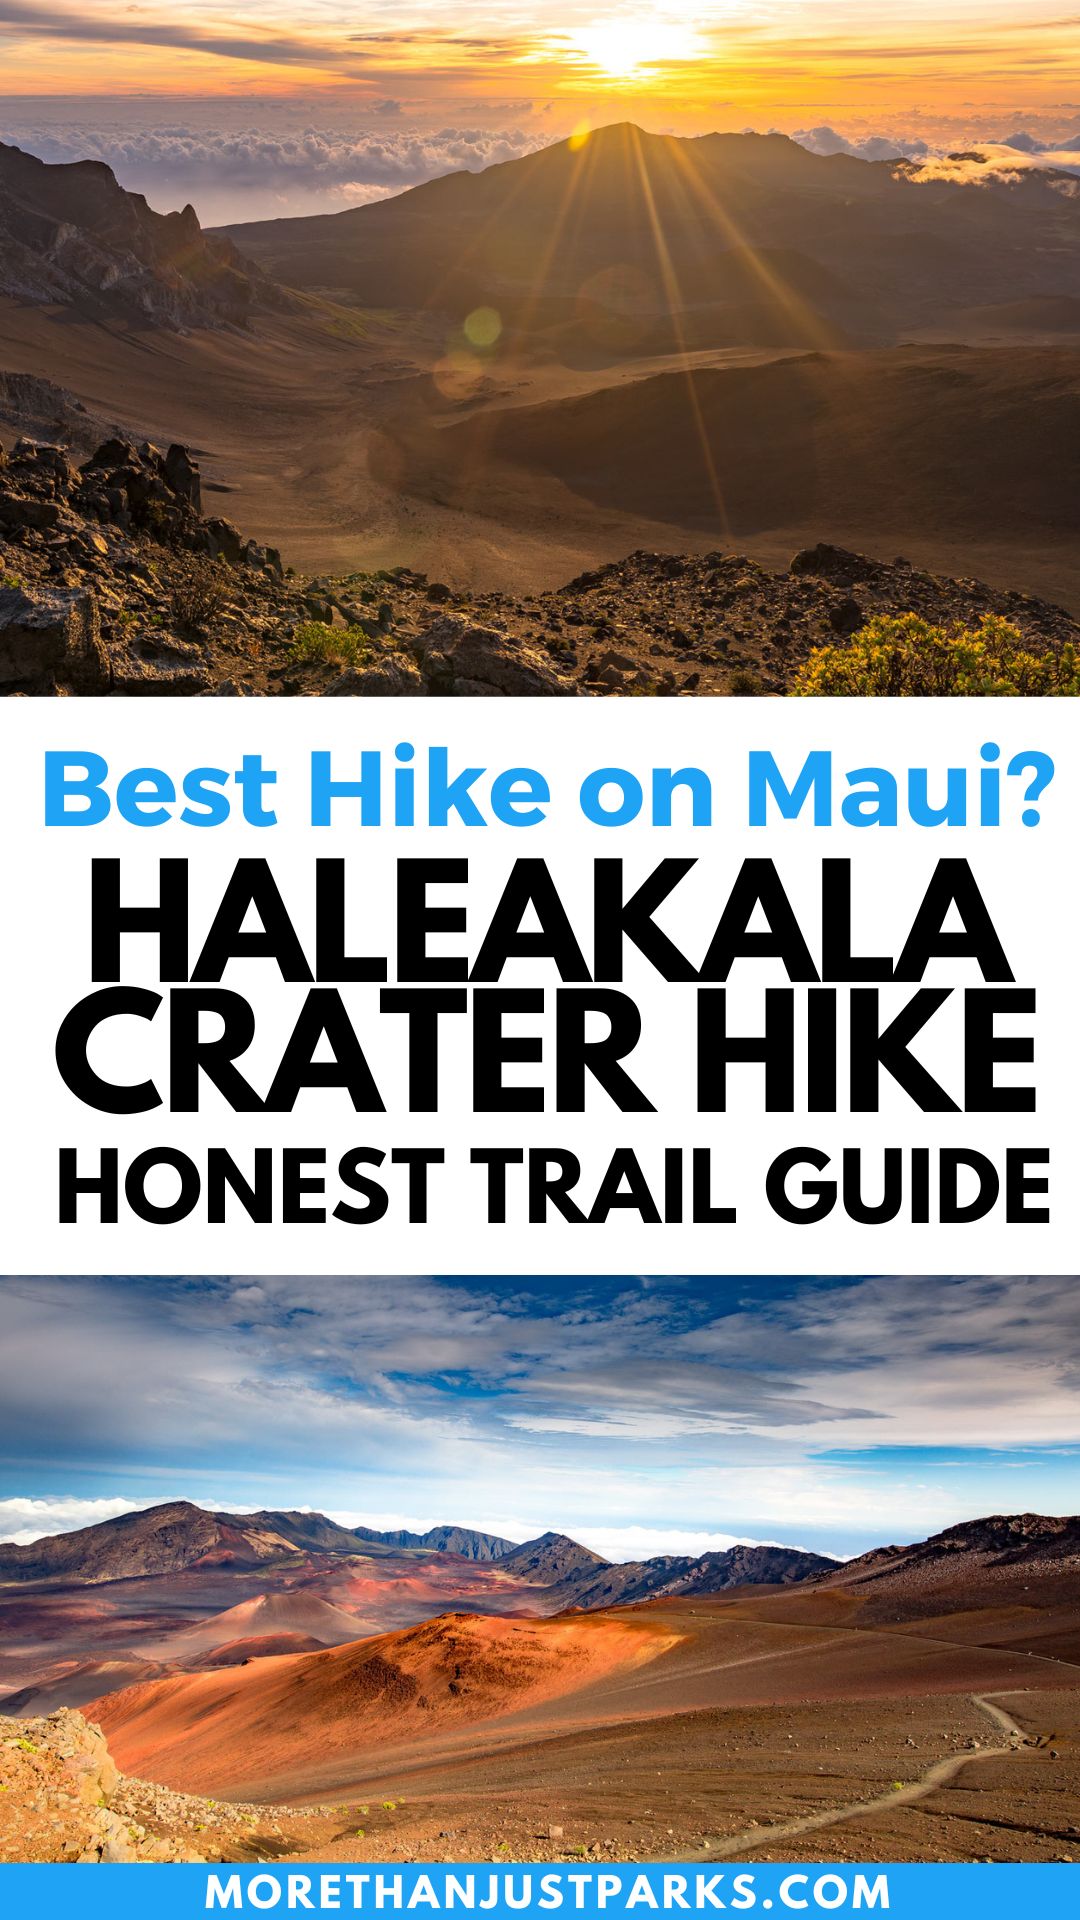 Haleakala Crater hike